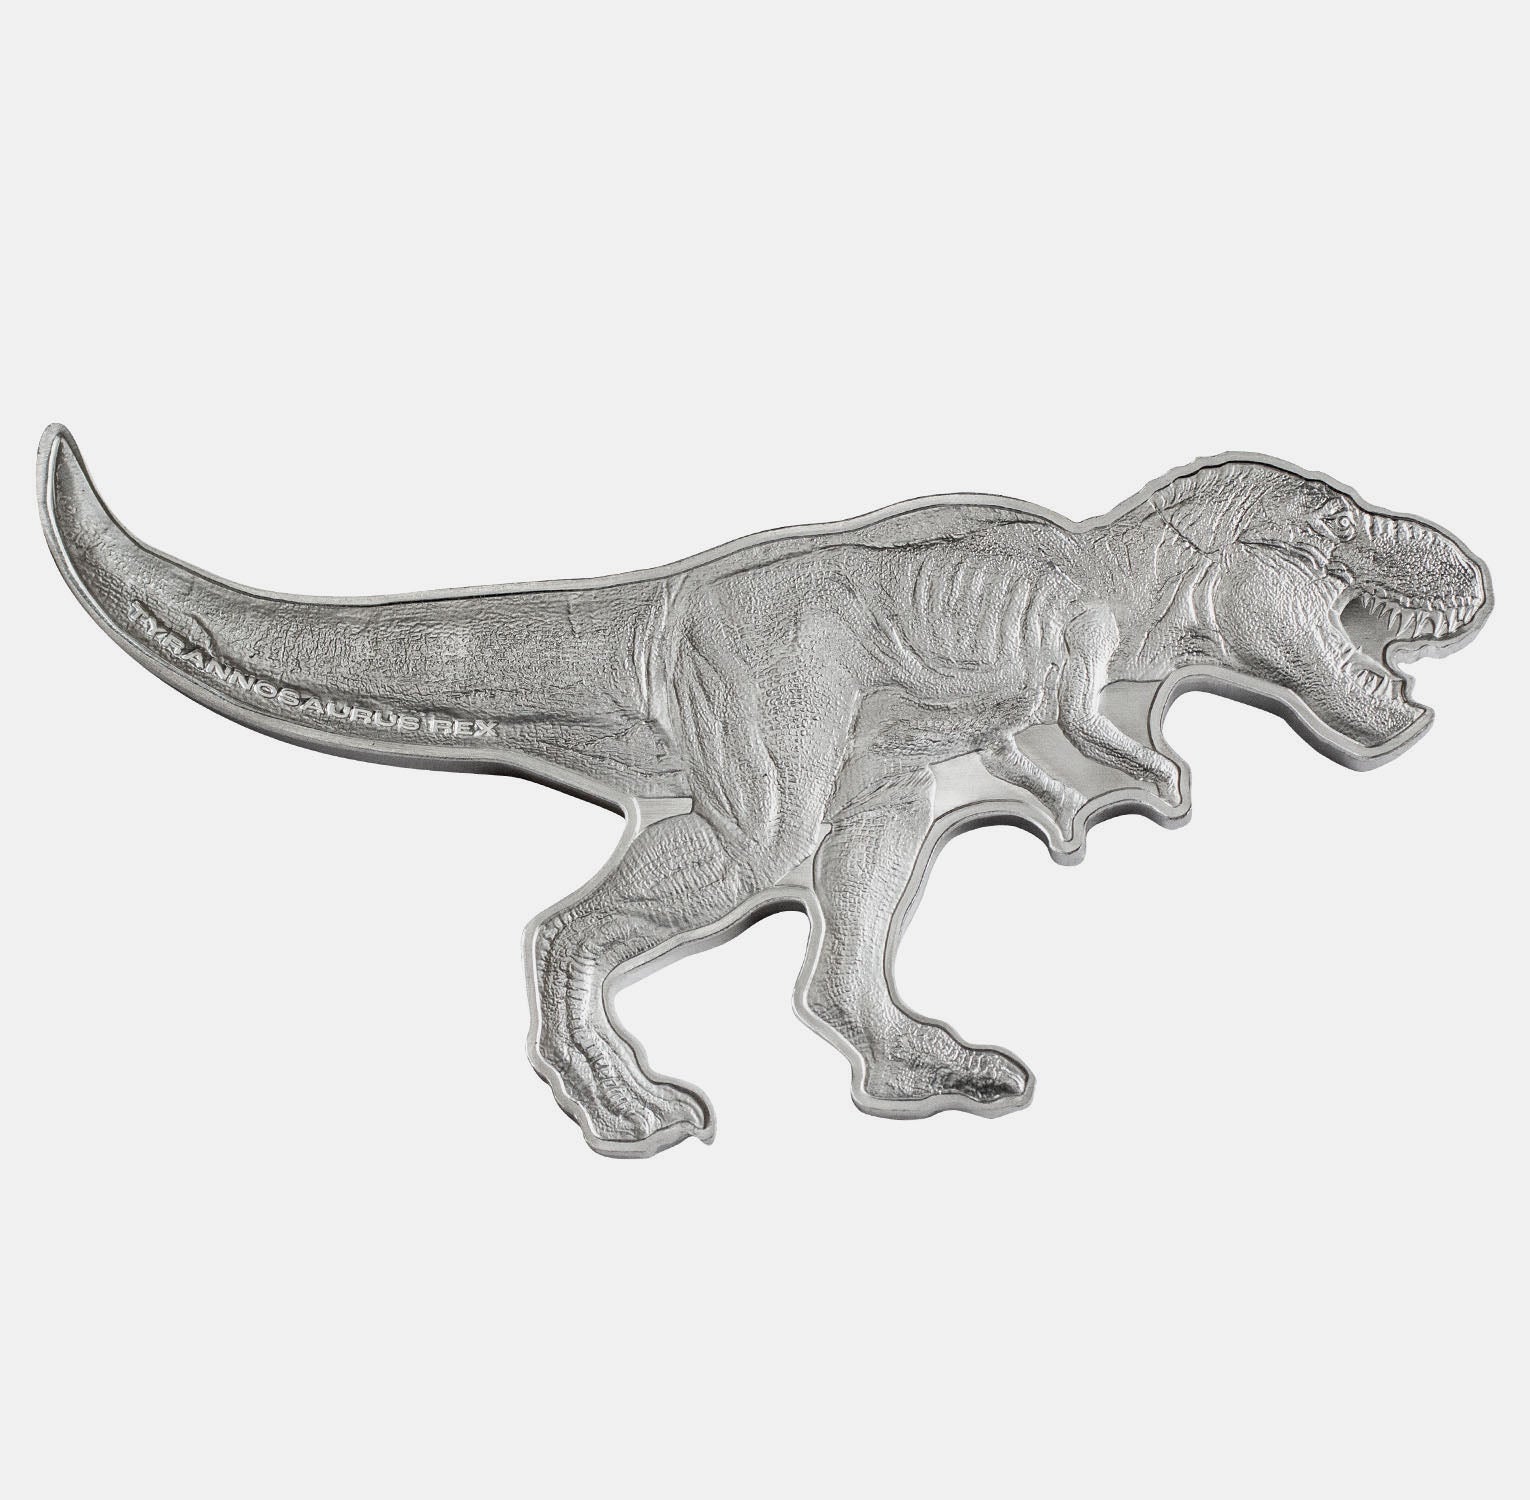 Tyrannosaurus Rex 3D 2oz Solid Silver Shaped Coin